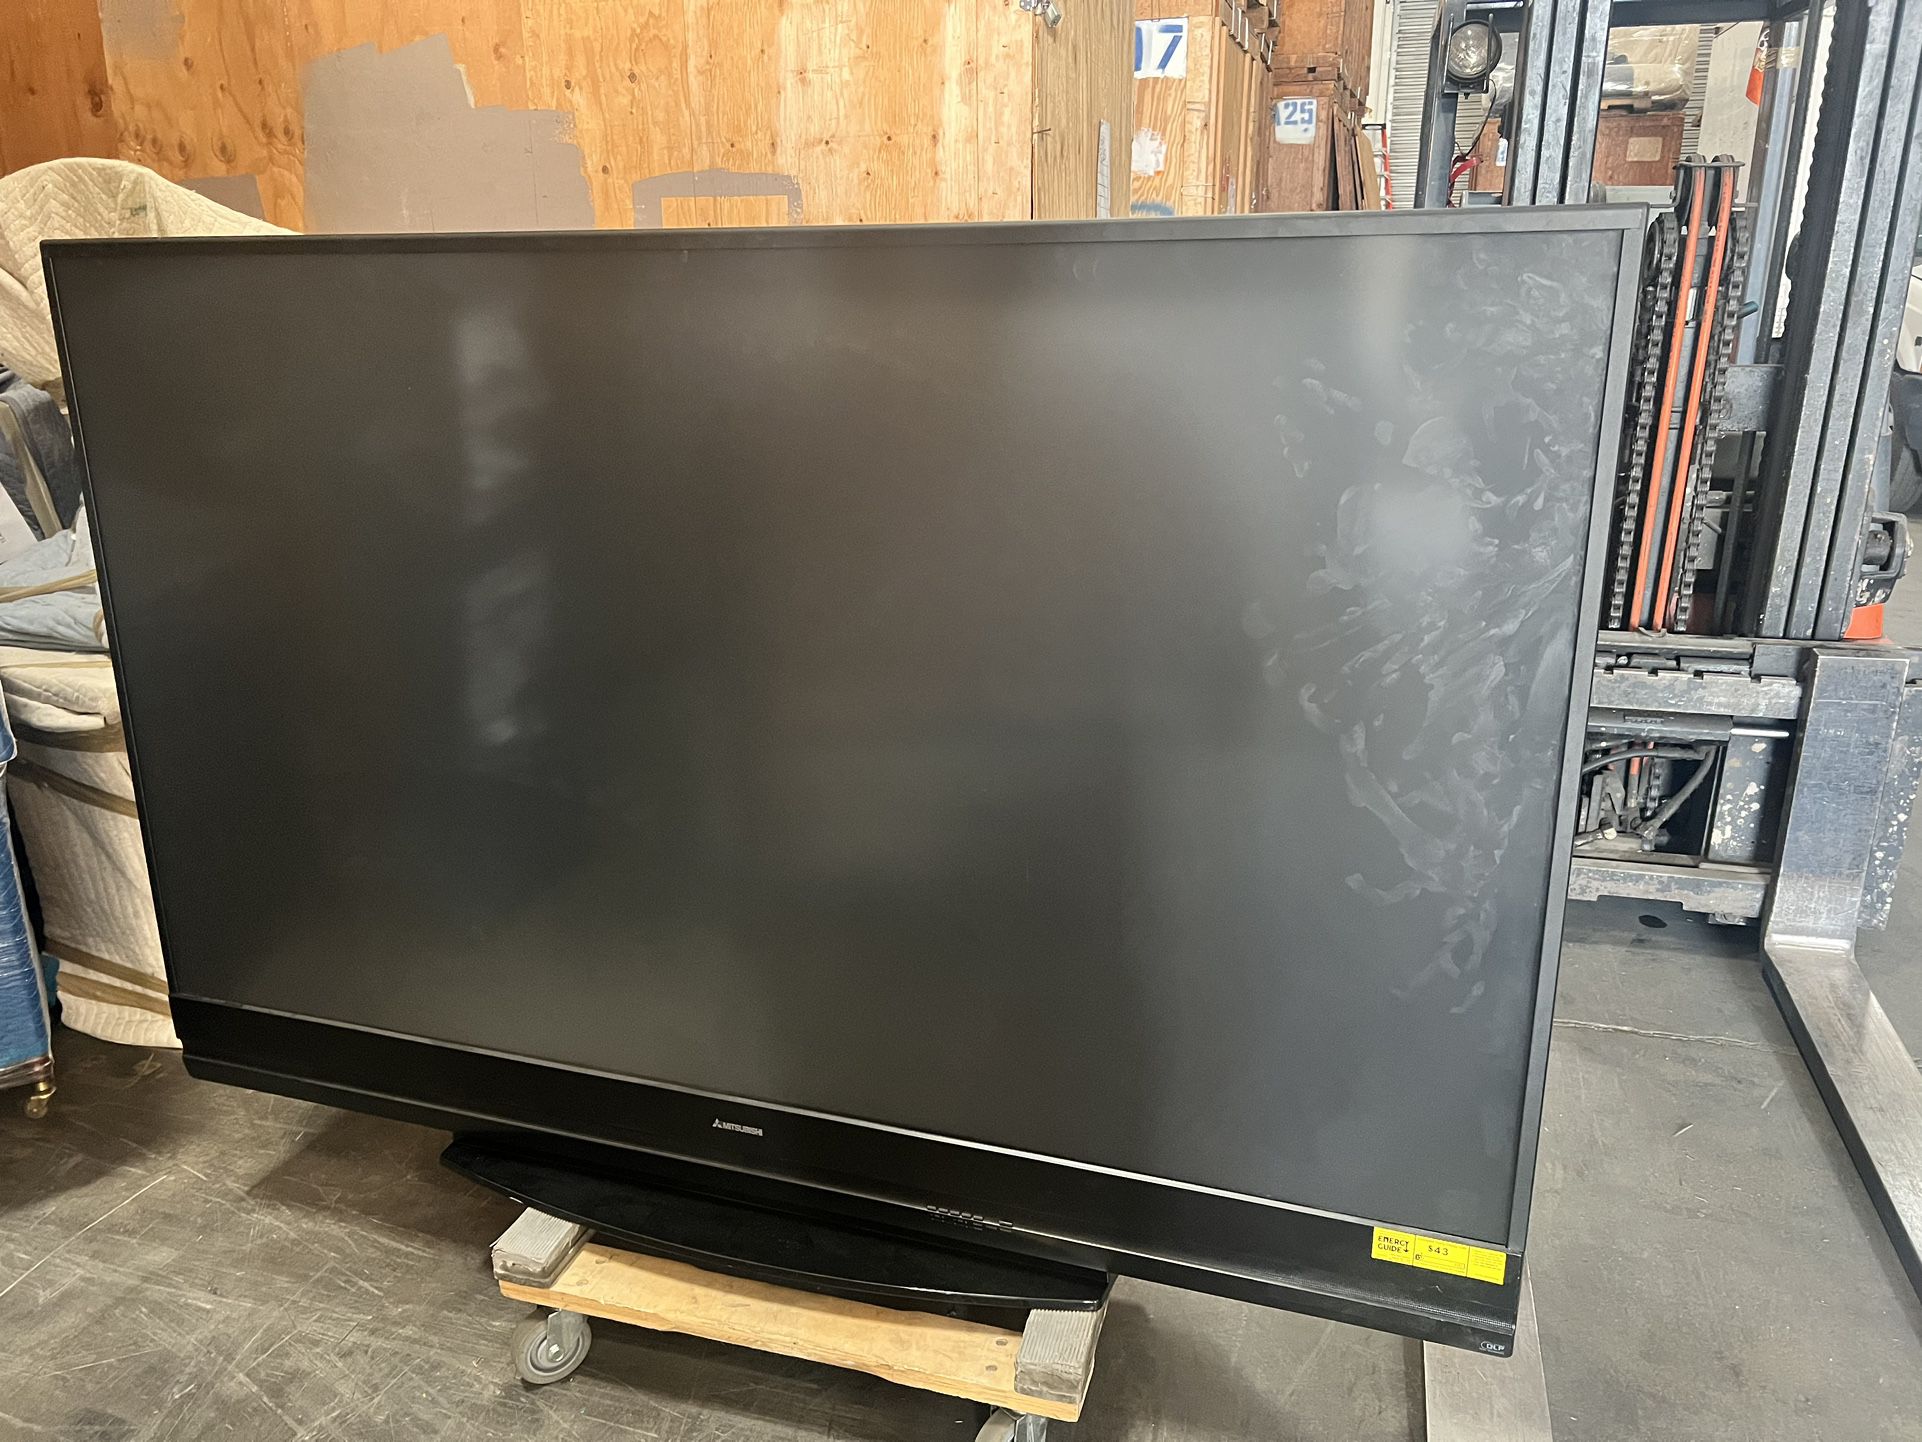 3TV Deal - 85-Inch Mitsubishi Projection TV & 37-Inch Dynex Flatscreen - $300 (San Bernardino)